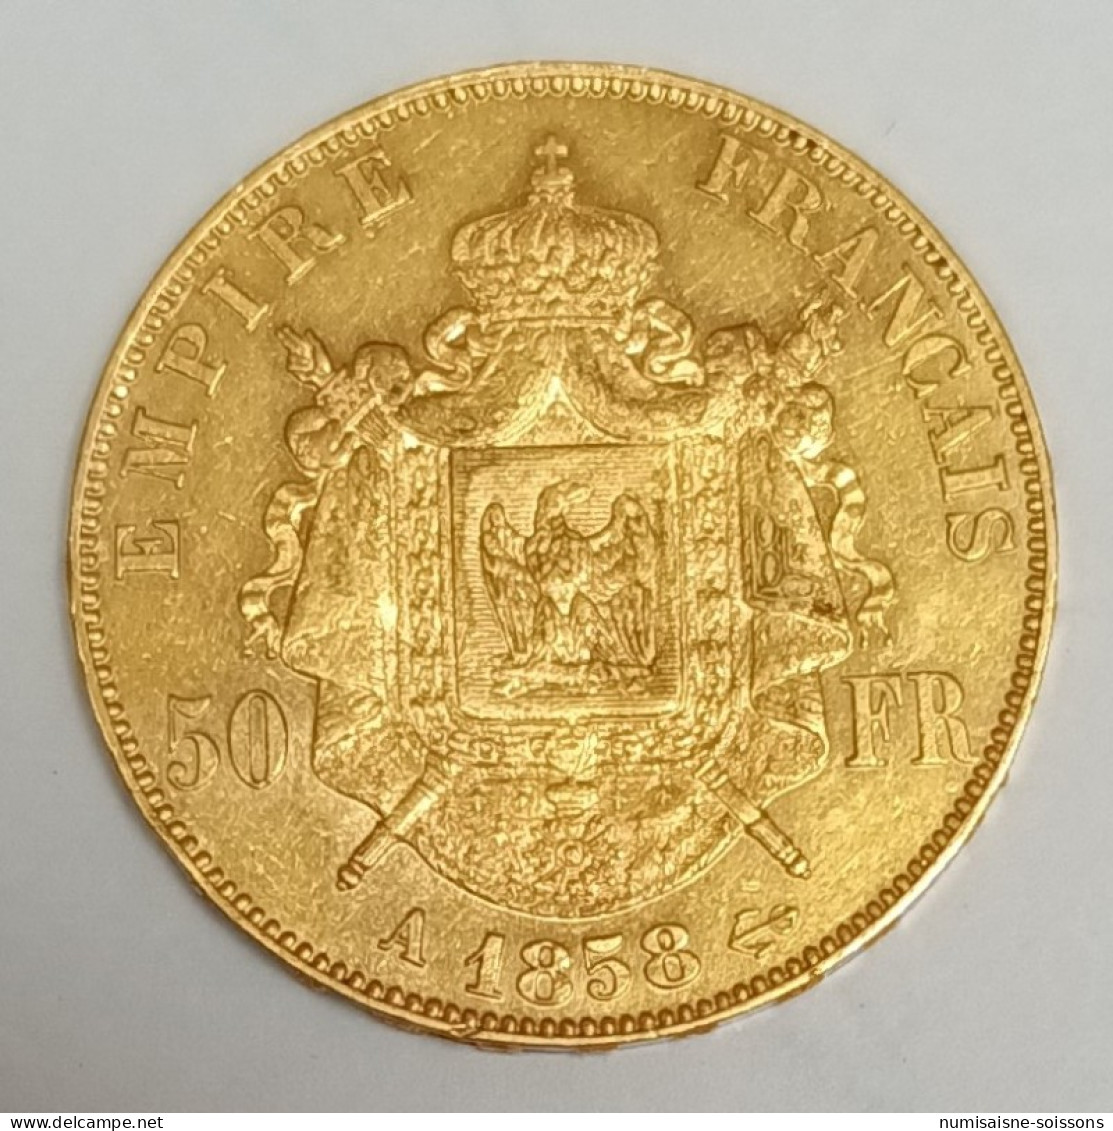 GADOURY 1111 - 50 FRANCS 1858 A - OR - NAPOLEON III - TETE NUE - TB+ - 50 Francs (gold)